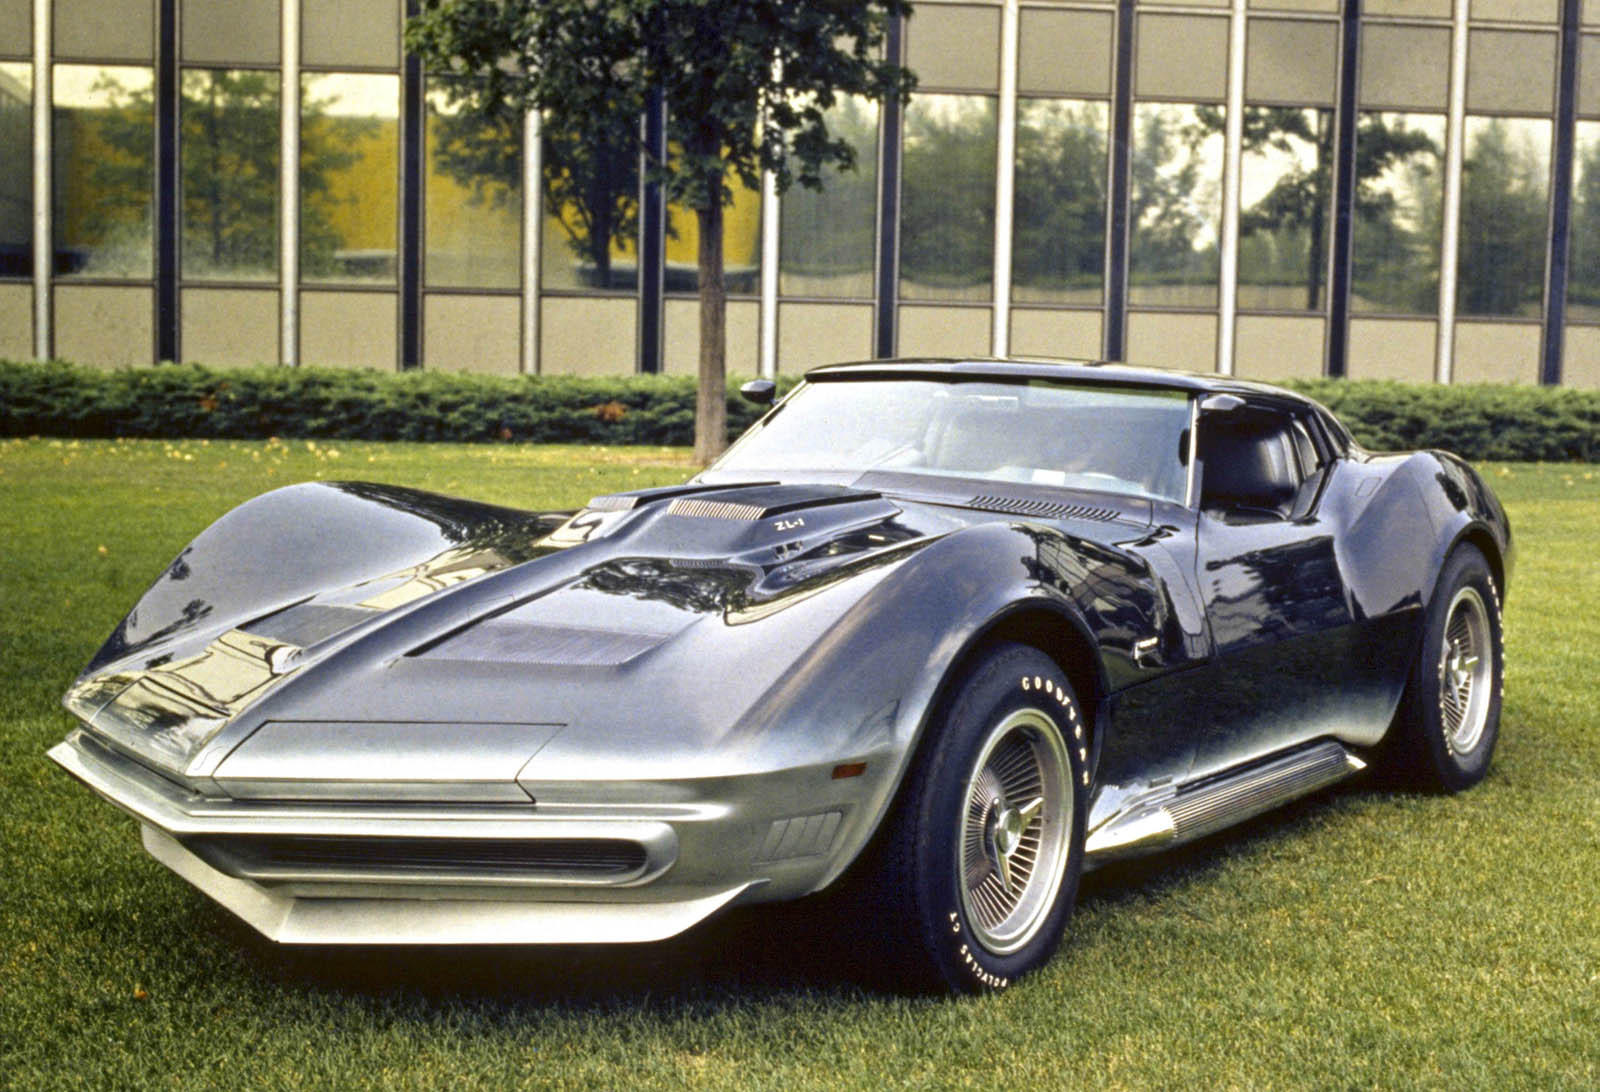 In 1969 a fost prezentat conceptul Manta Ray, o evolutie a lui Corvette Mako Shark II